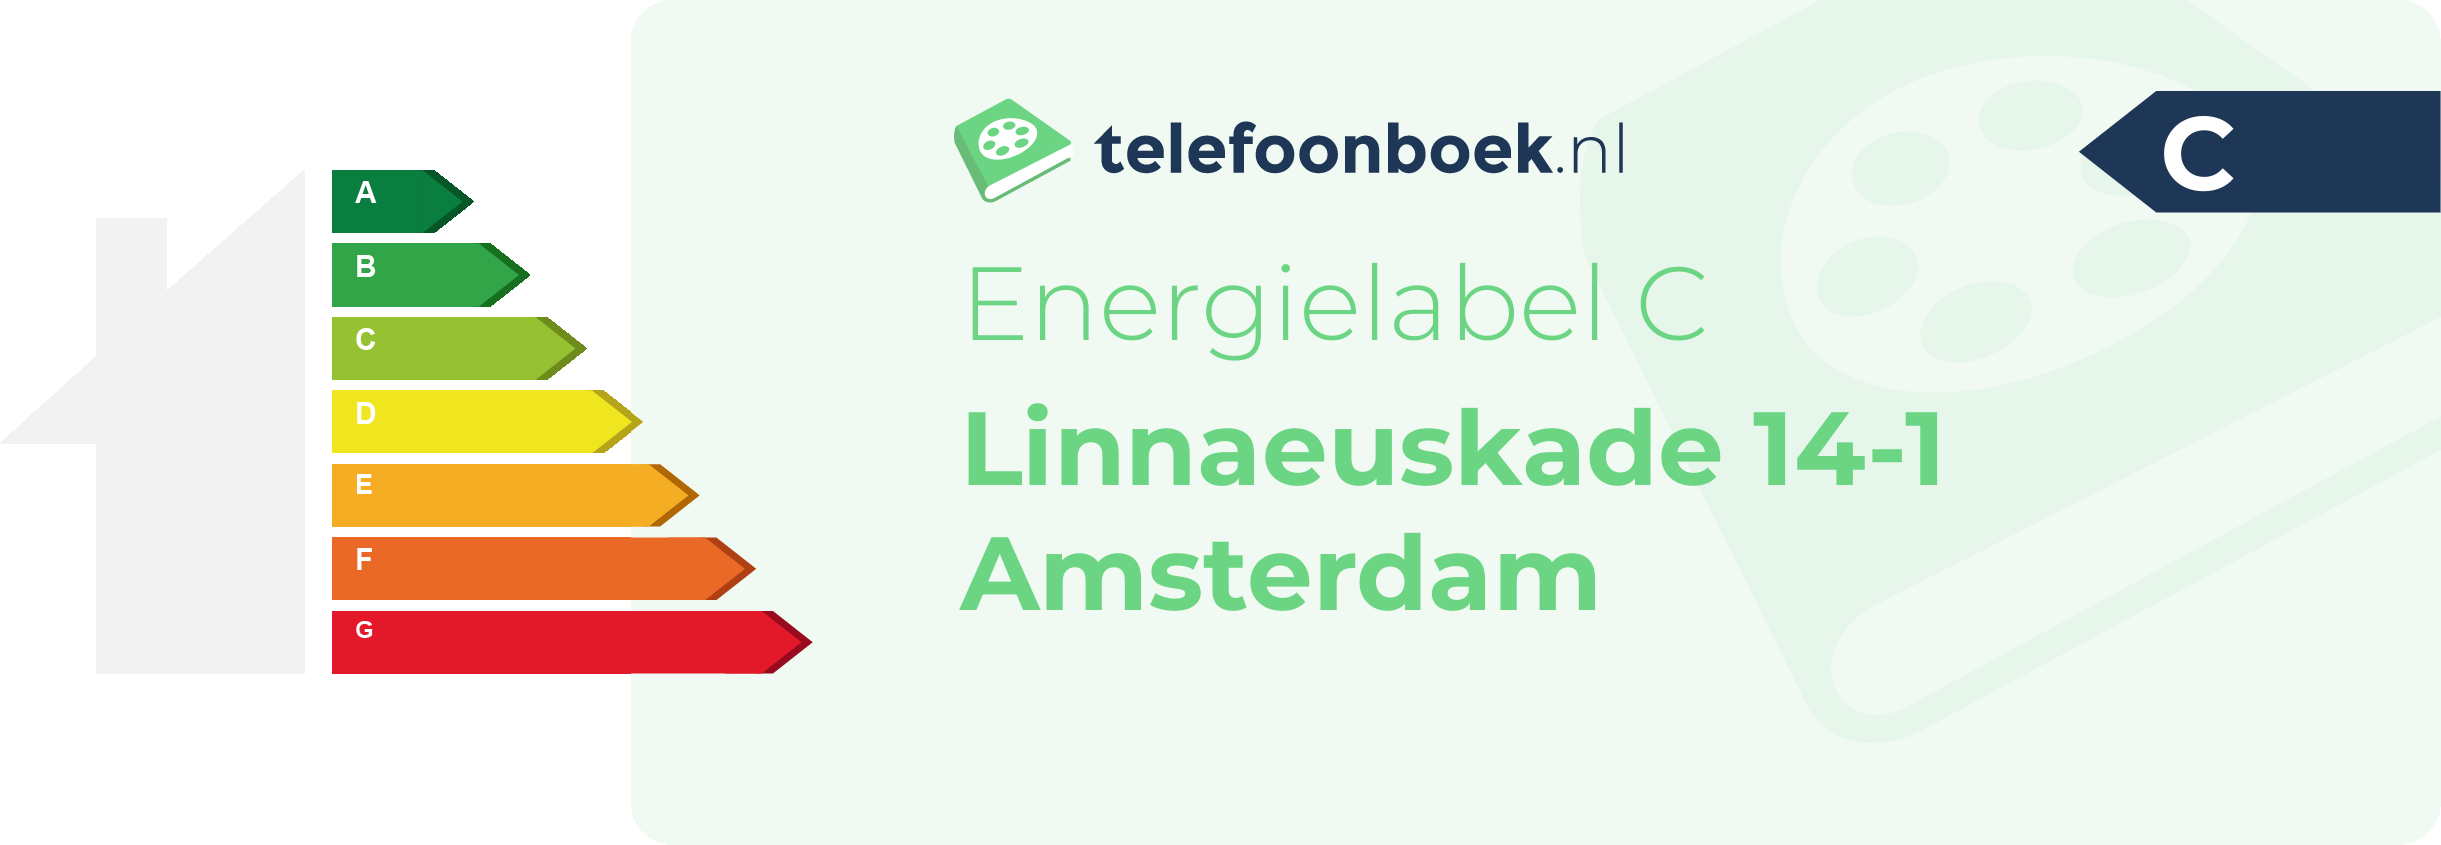 Energielabel Linnaeuskade 14-1 Amsterdam